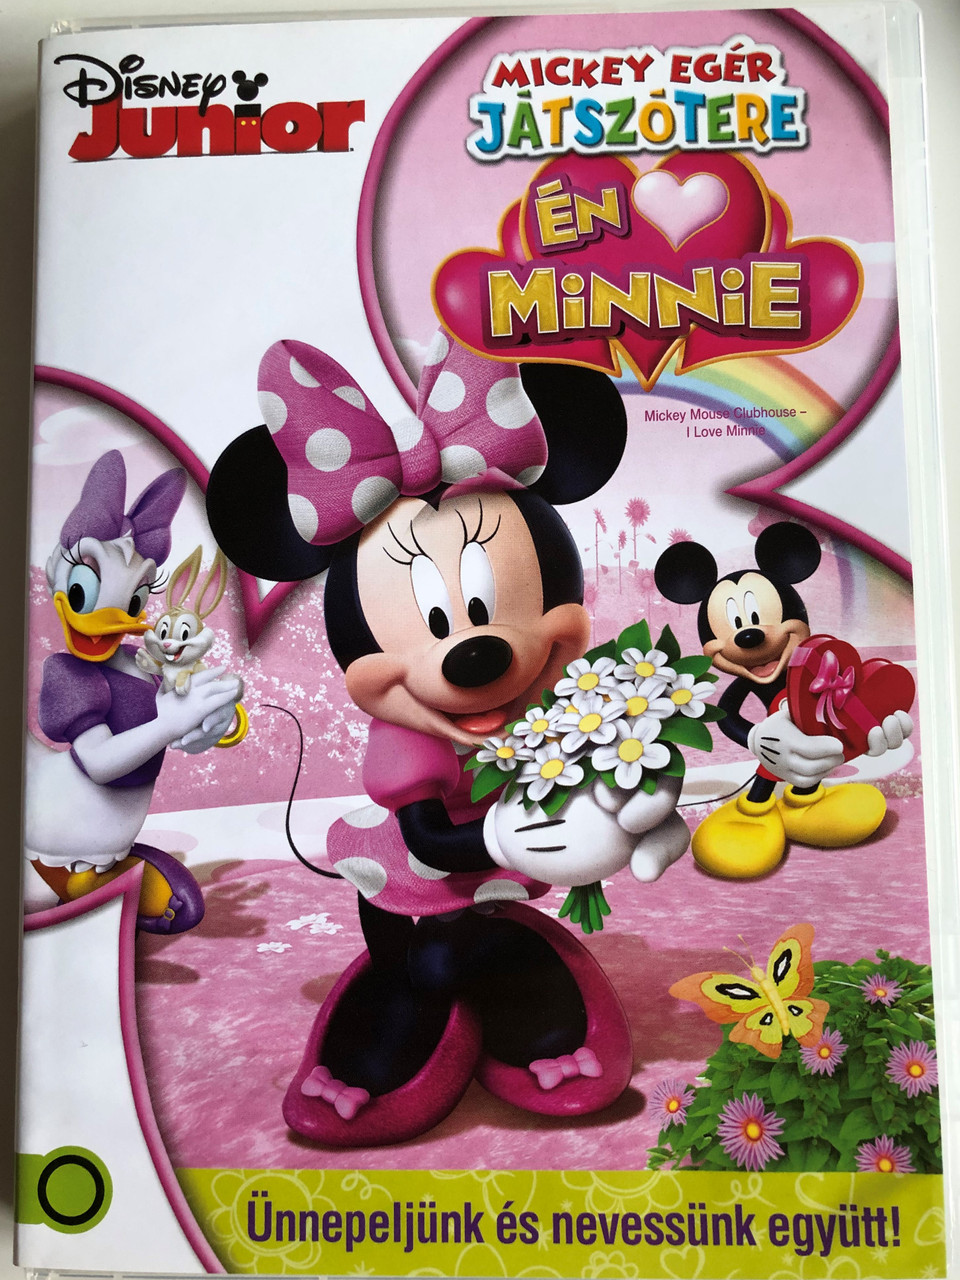 Mickey Mouse Clubhouse - I Love Minnie DVD 2013 Mickey Egér Játszótere / 4  Episodes on Disc - bibleinmylanguage